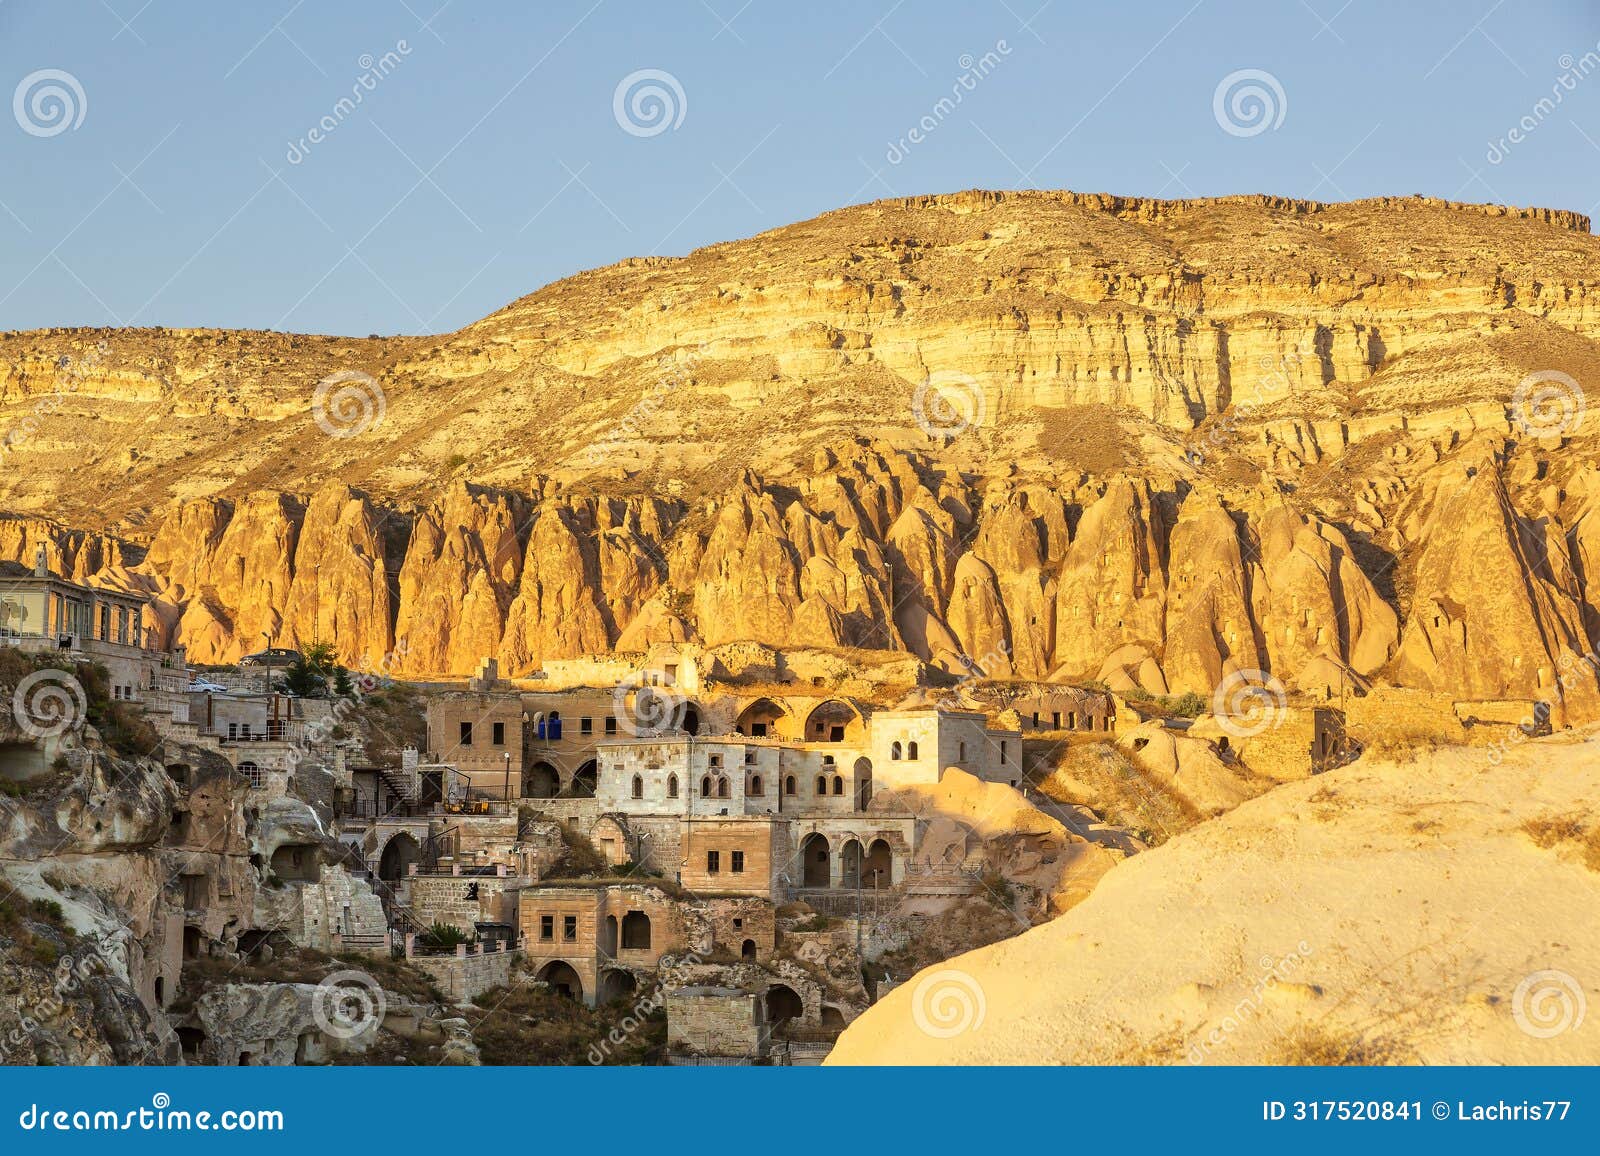 beautiful landscape glimpse of cavusin in cappadocia